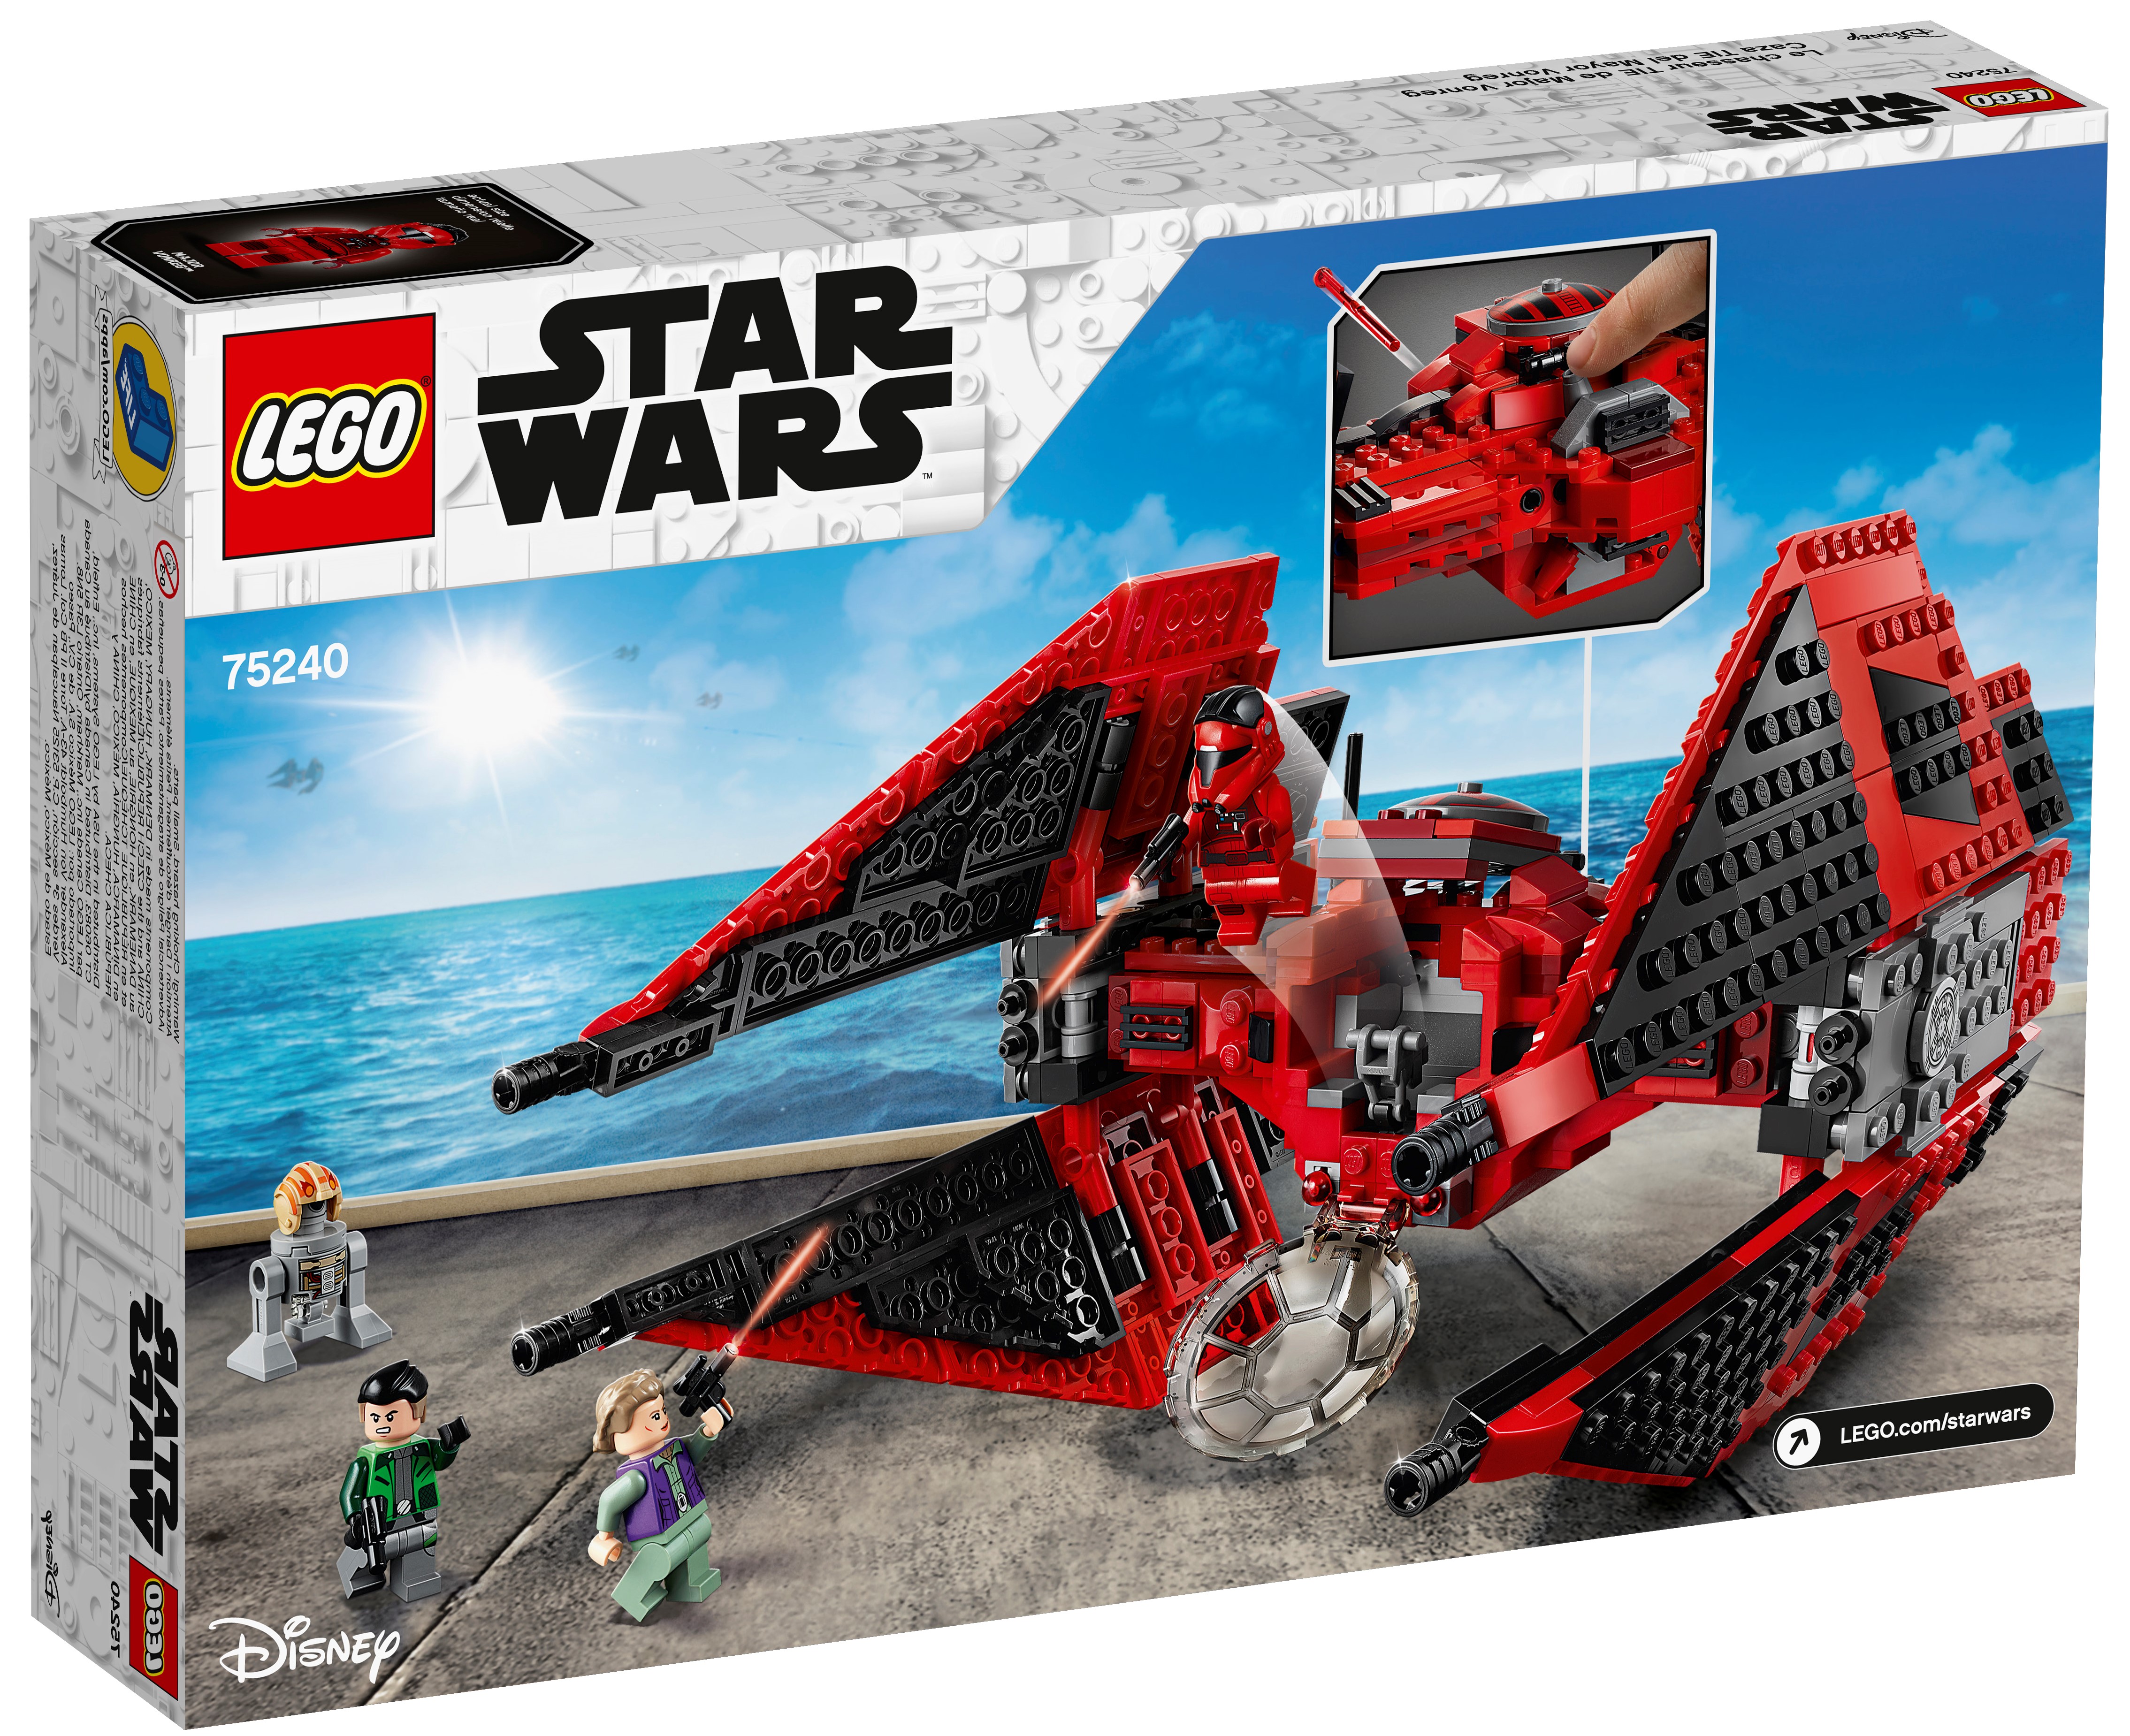 Lego ® Star Wars ™ 75240 major vonreg's tie figther ™ nuevo embalaje original _ New misb NRFB